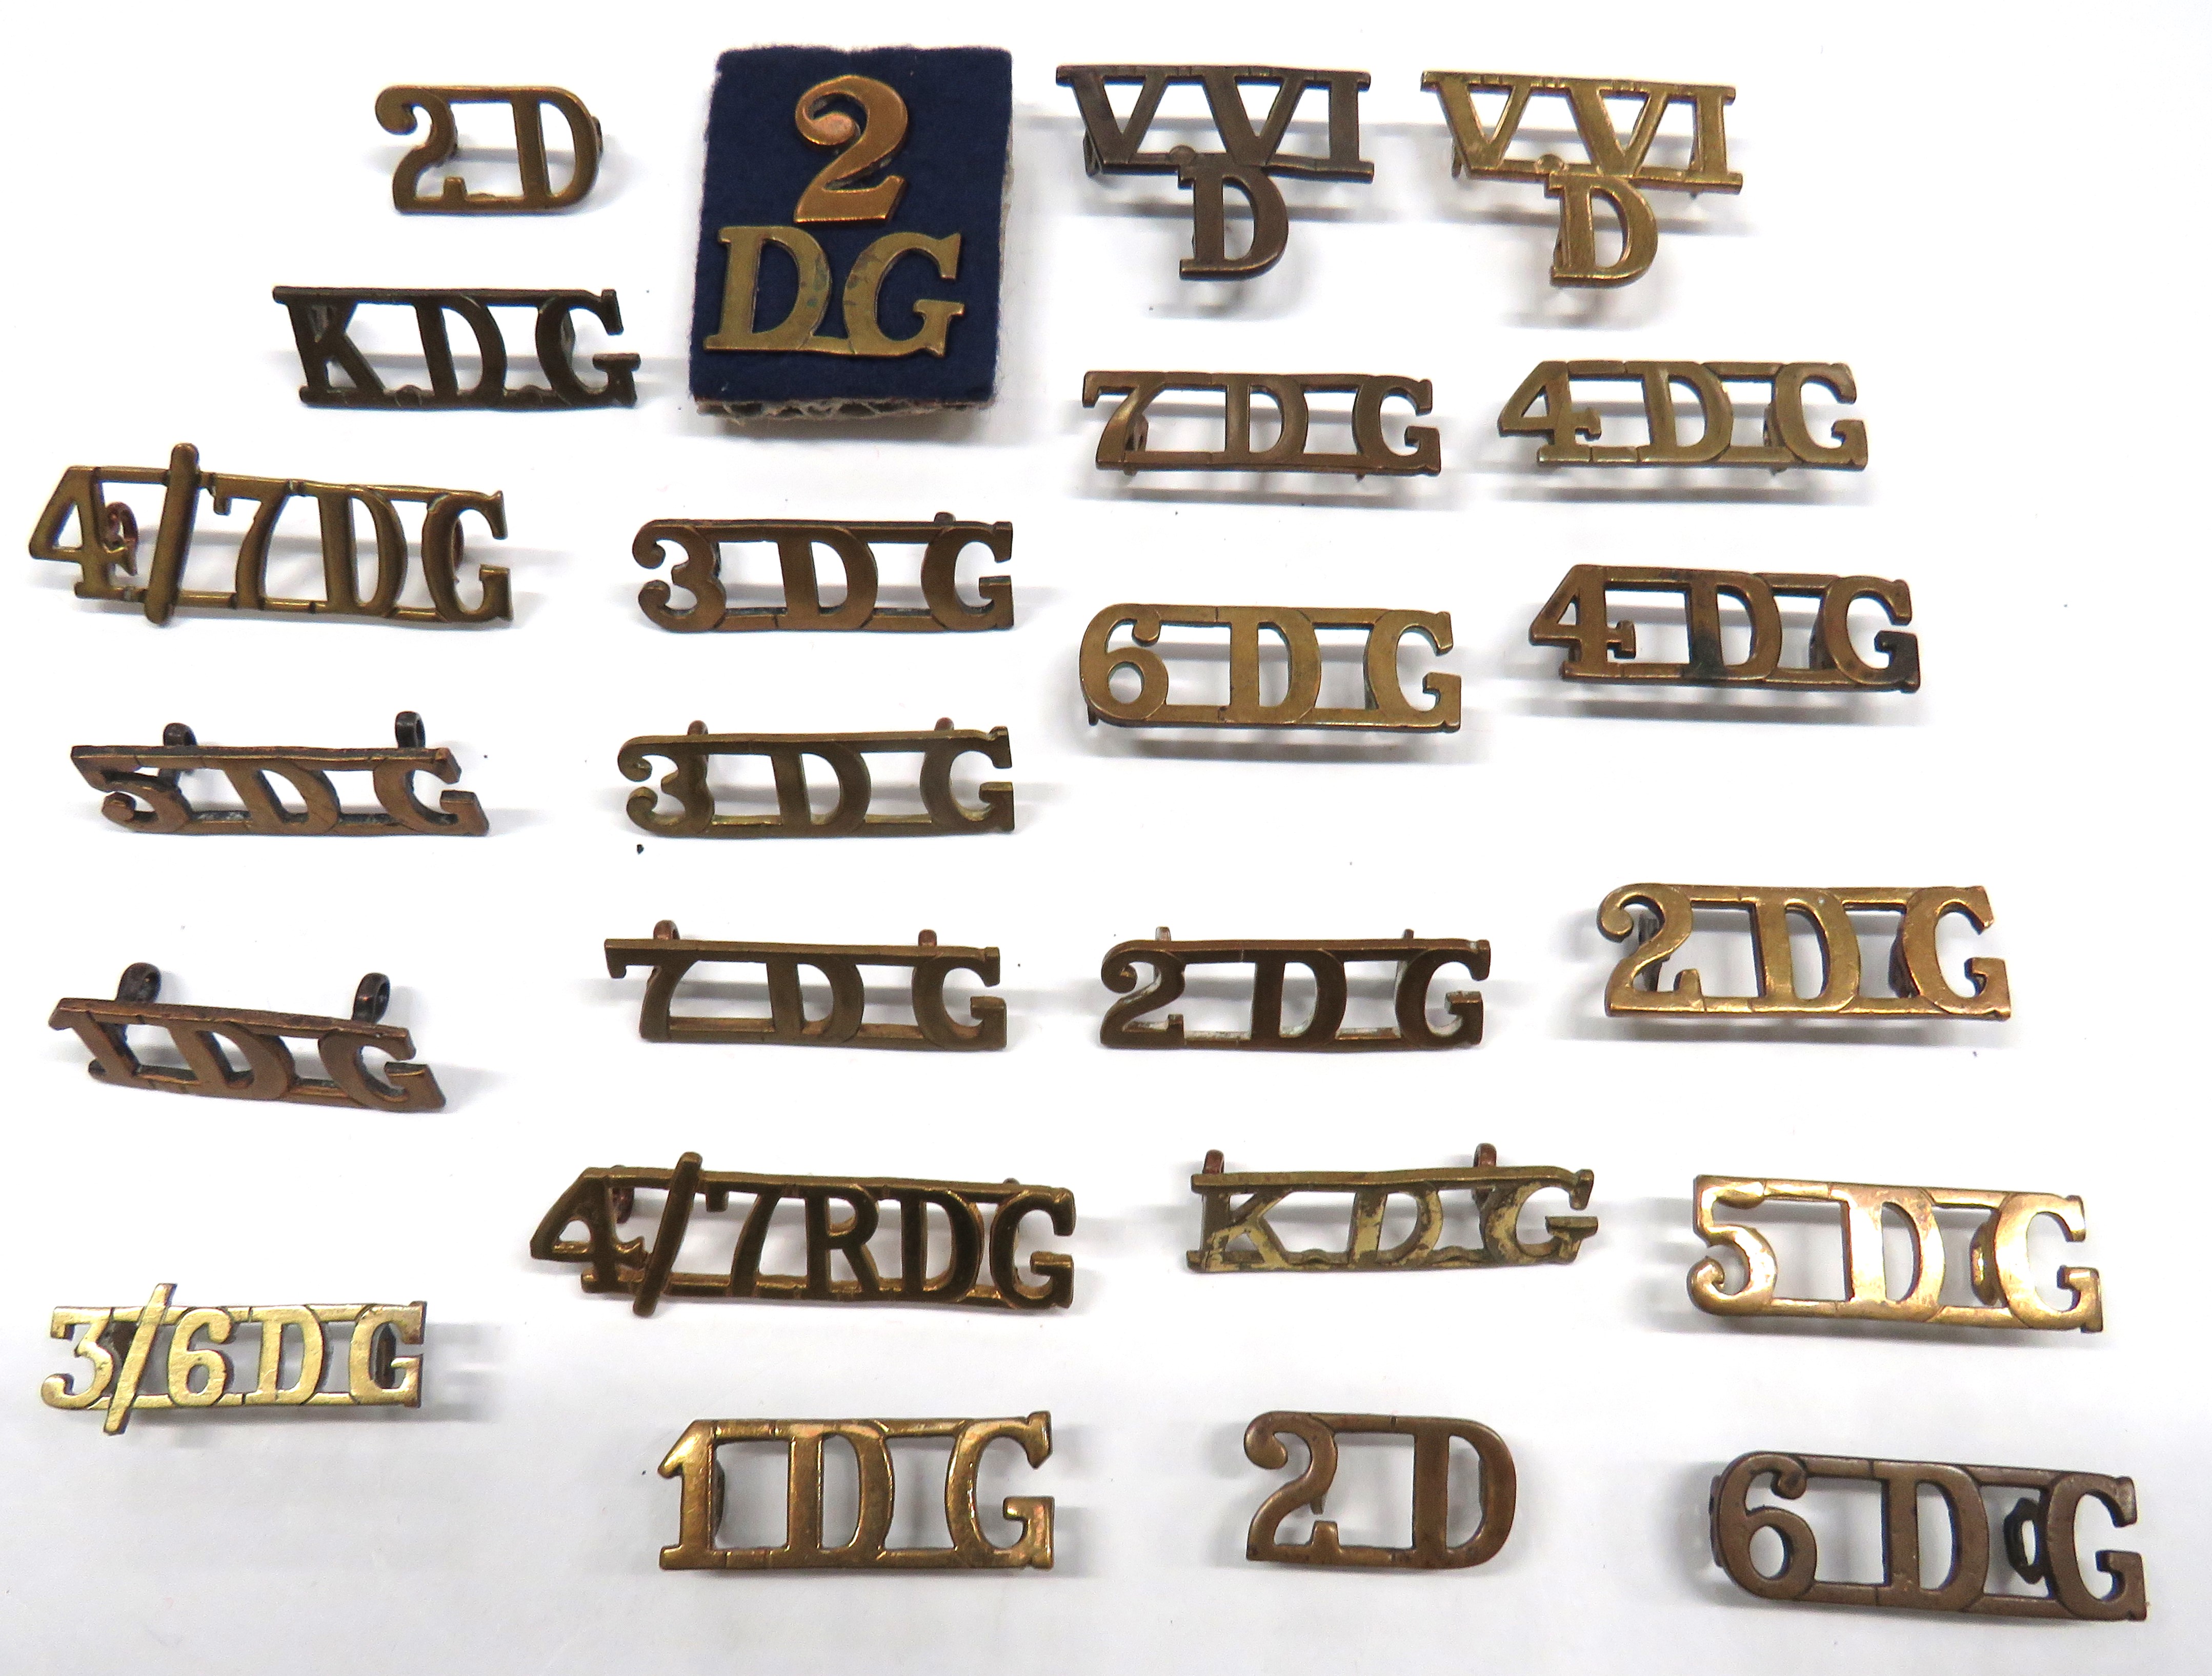 24 x Dragoon Guards Brass Shoulder Titles including KDG ... 1DG ... 2D ... 2DG (2 part) ... 2DG ..